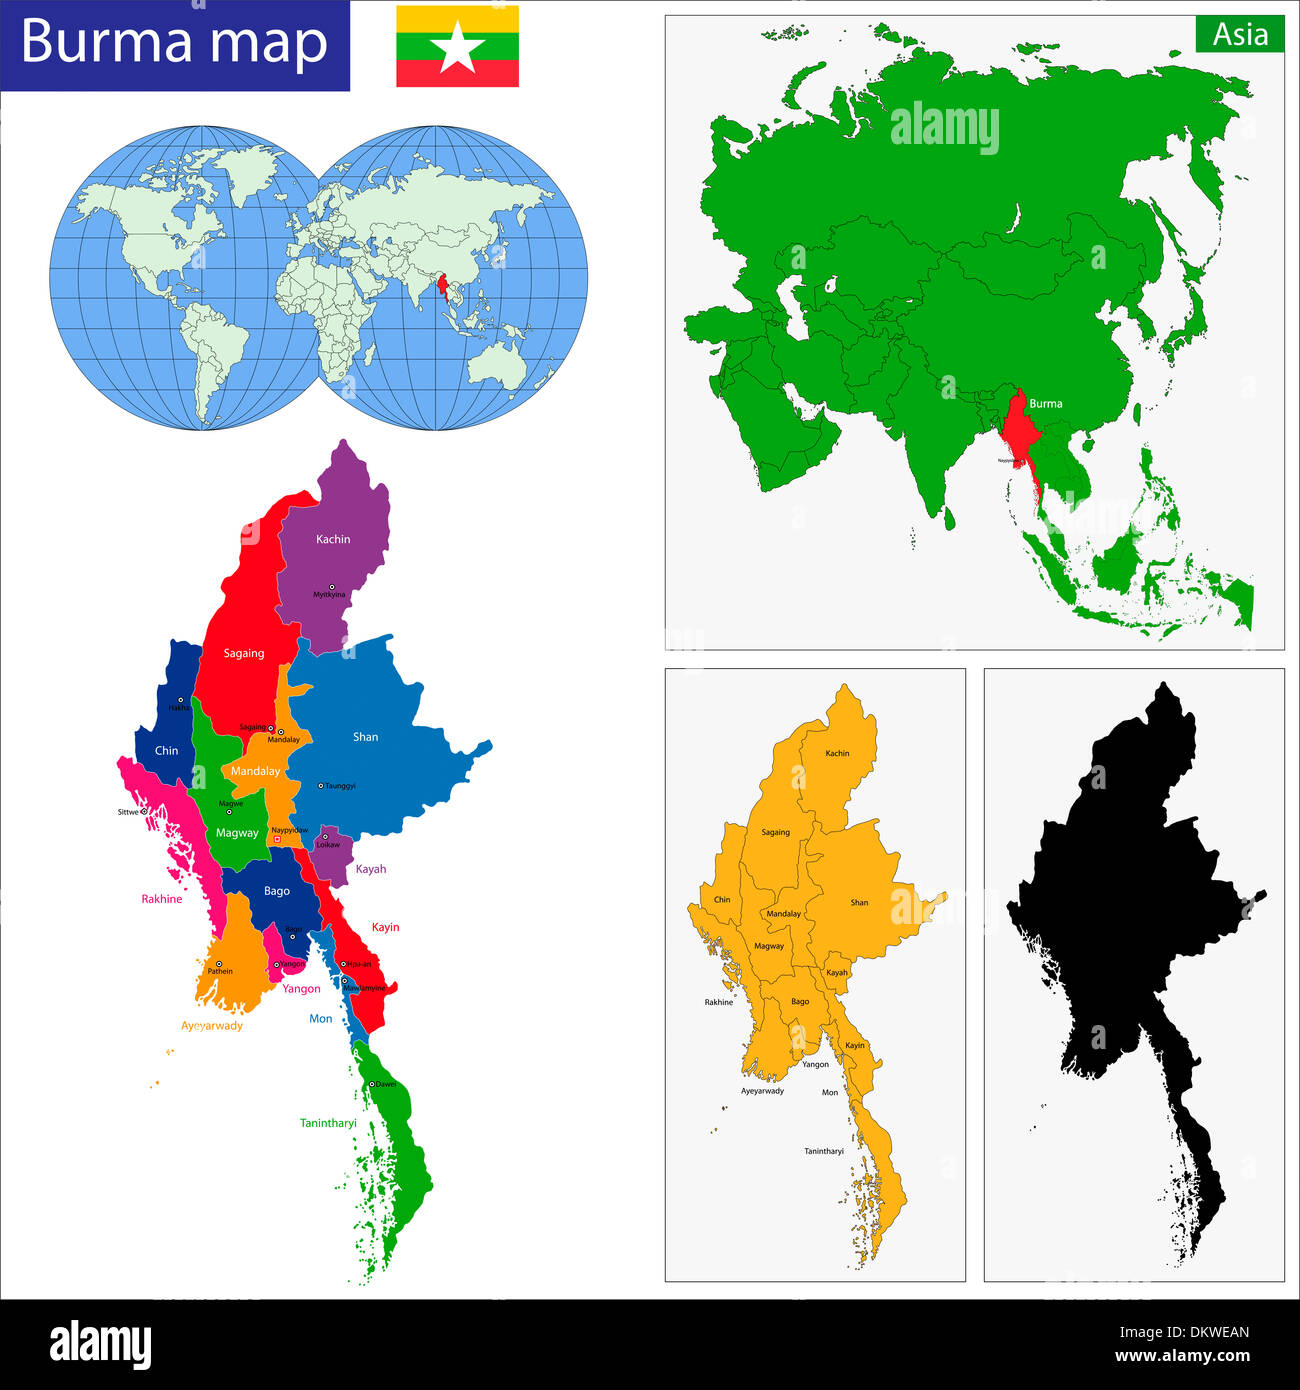 Burma map Stock Photo